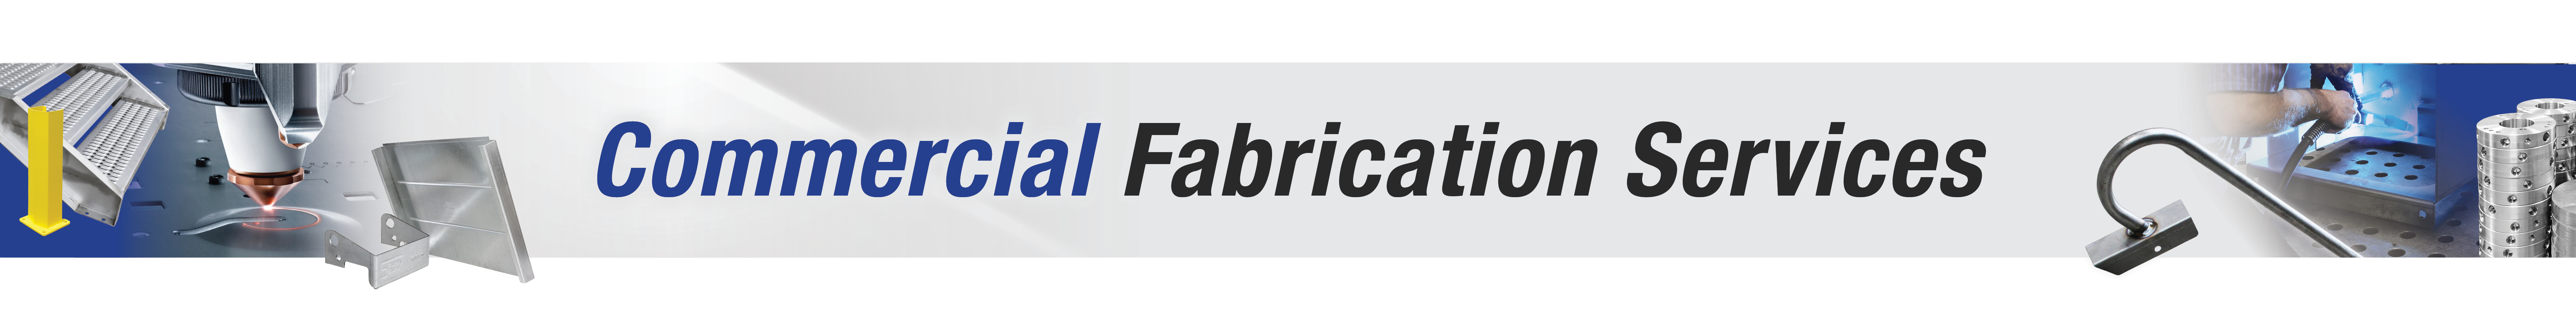 Commercial Fabrication Services - Desktop